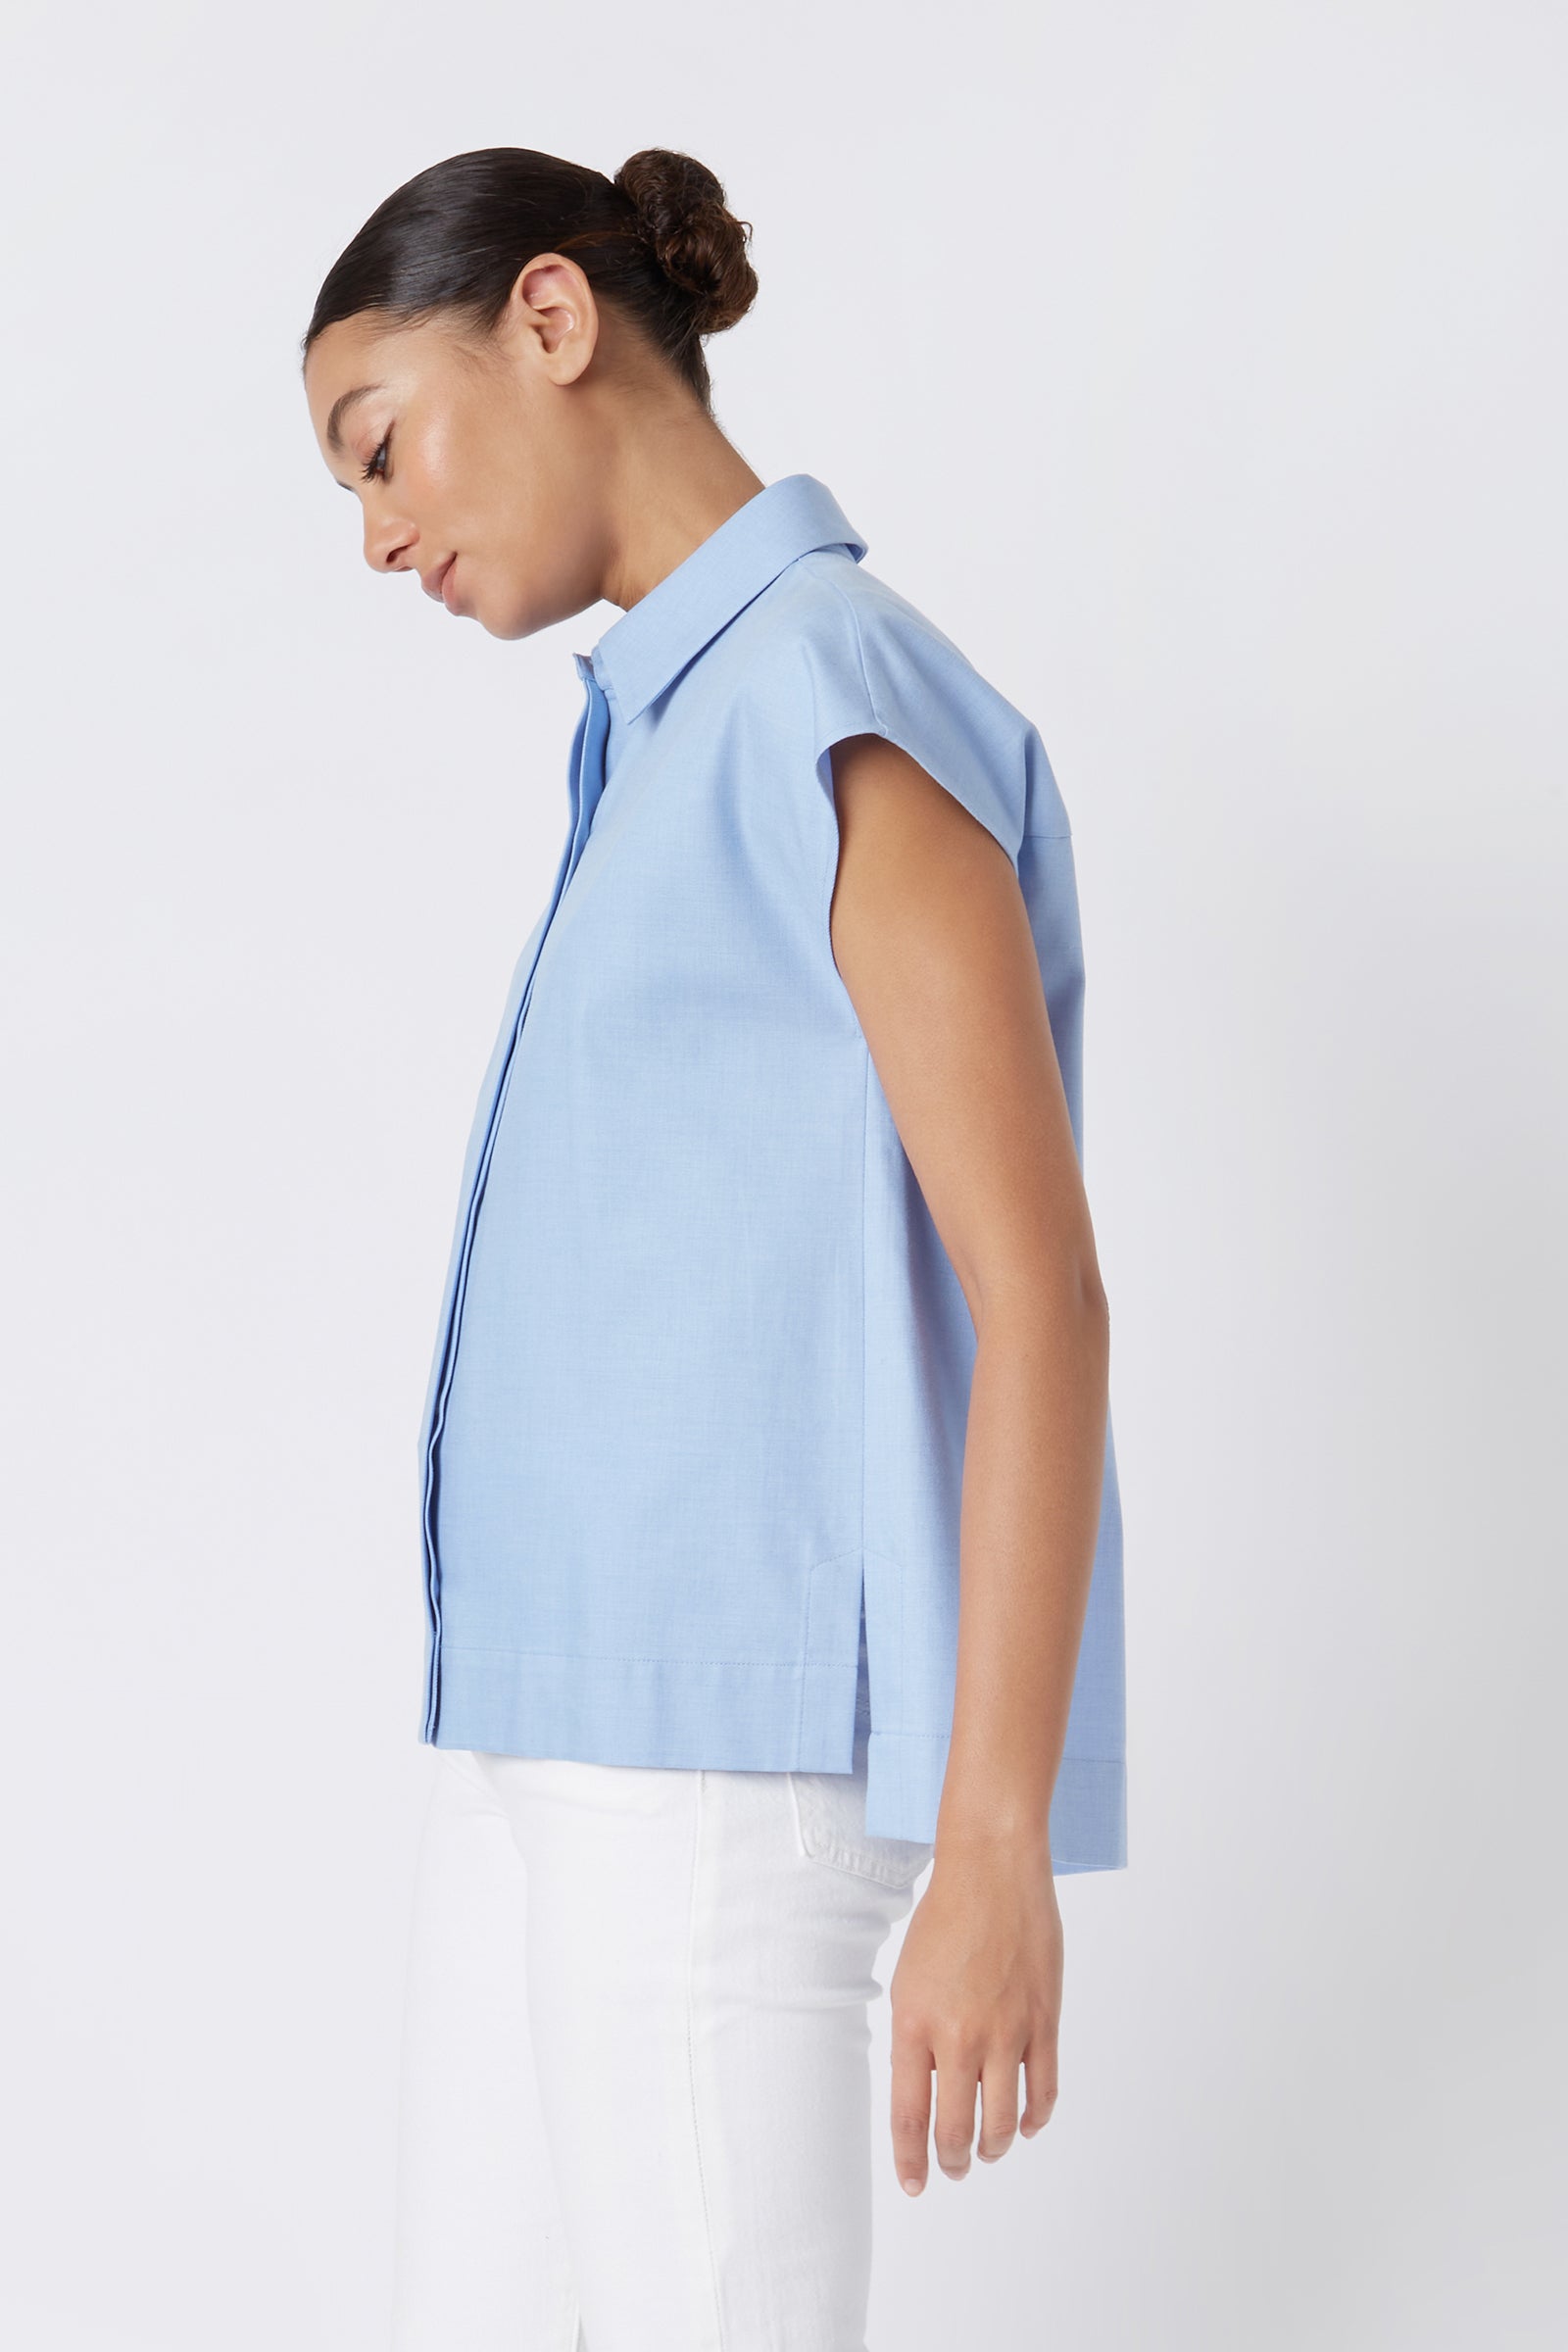 Kal Rieman Jane Cap Sleeve Shirt in Blue on Model Cropped Side View